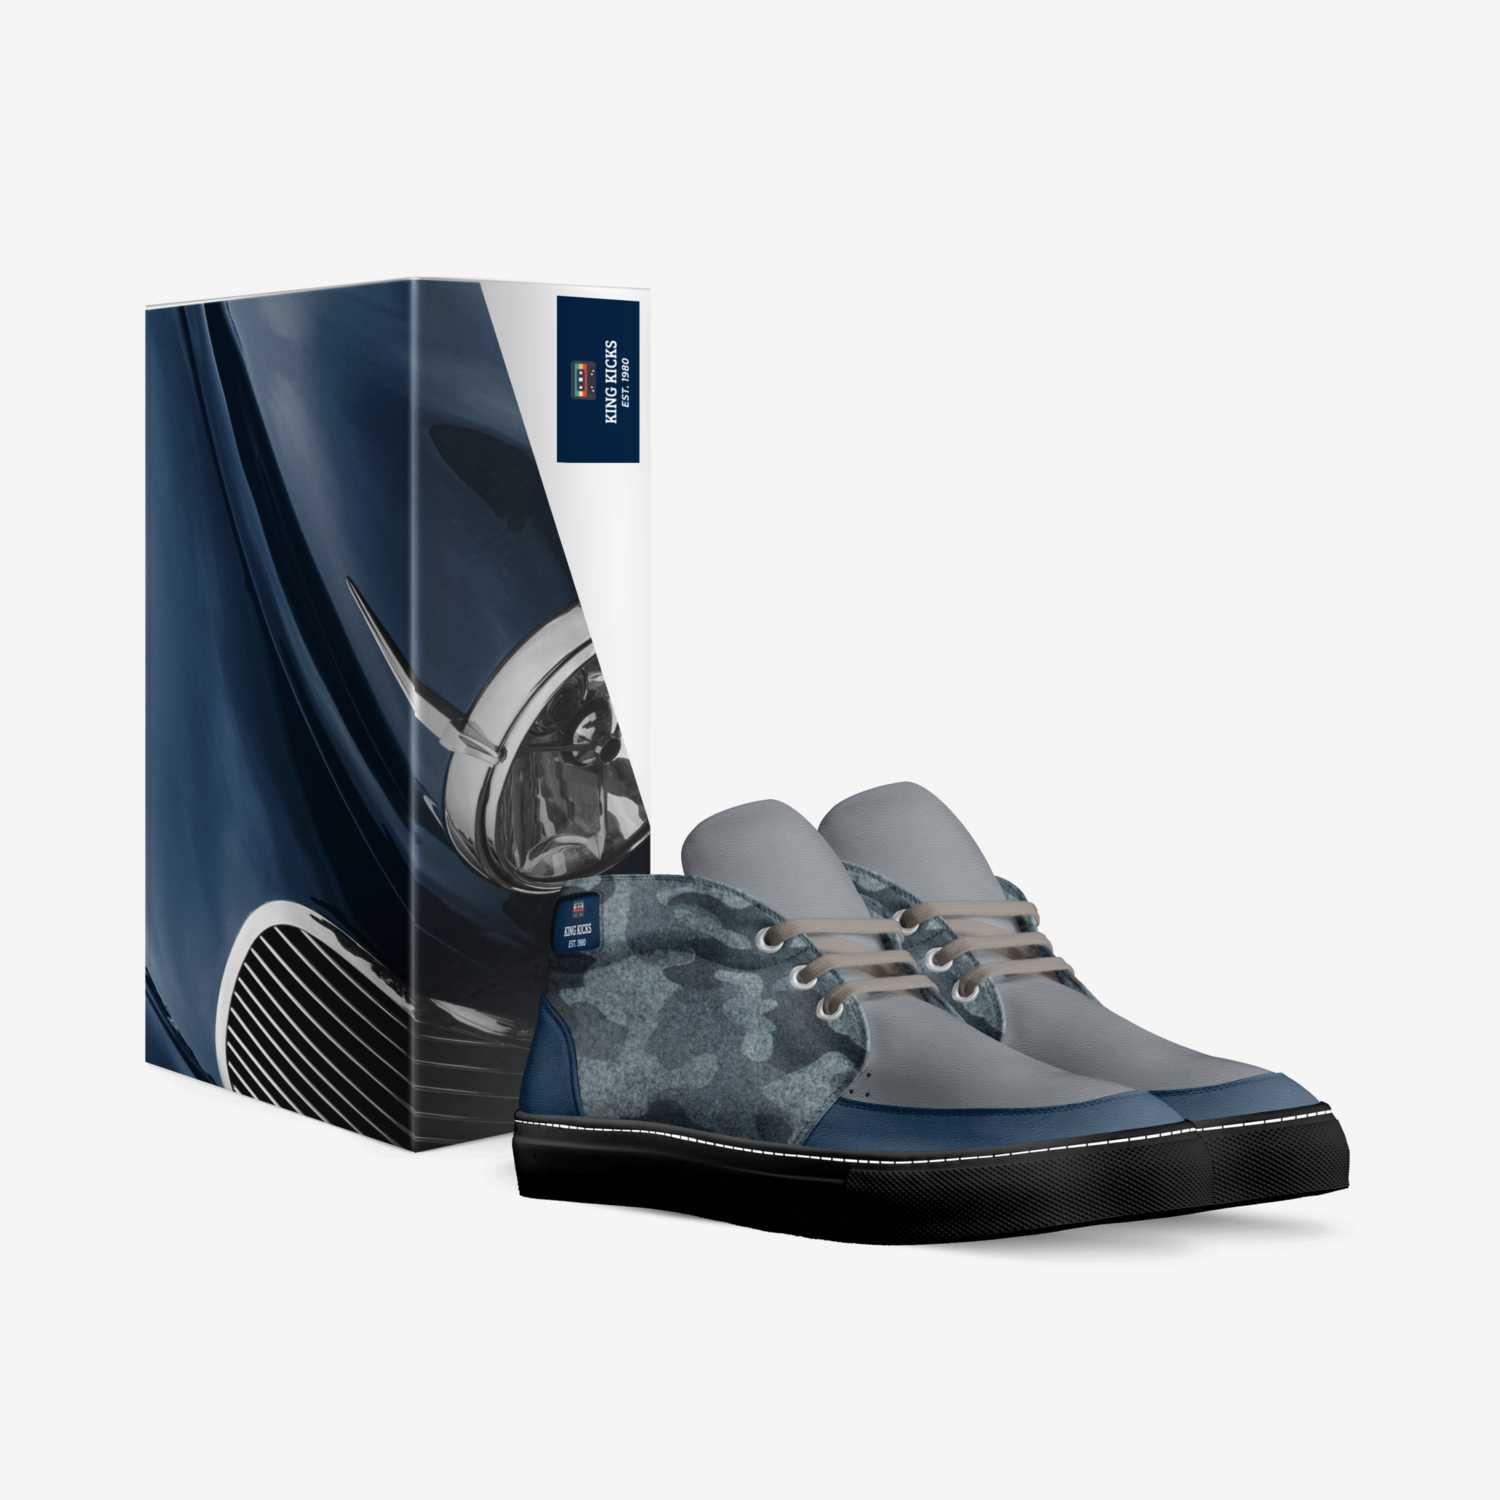 King Kicks custom made in Italy shoes by Zenobia El Bey | Box view